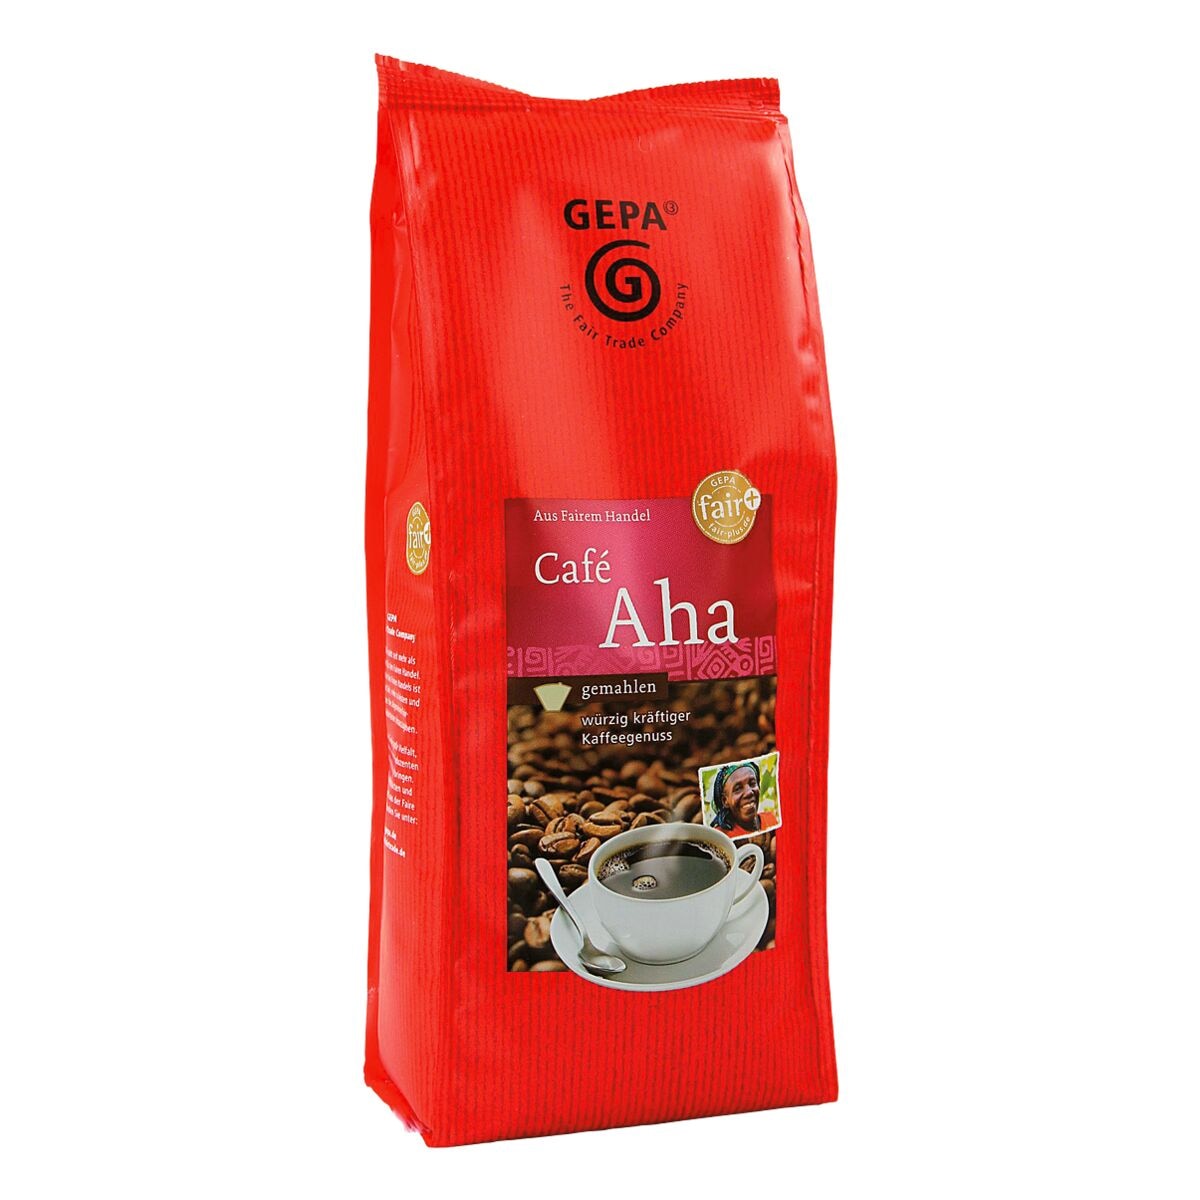 GEPA Caf Aha Kaffee gemahlen 500 g